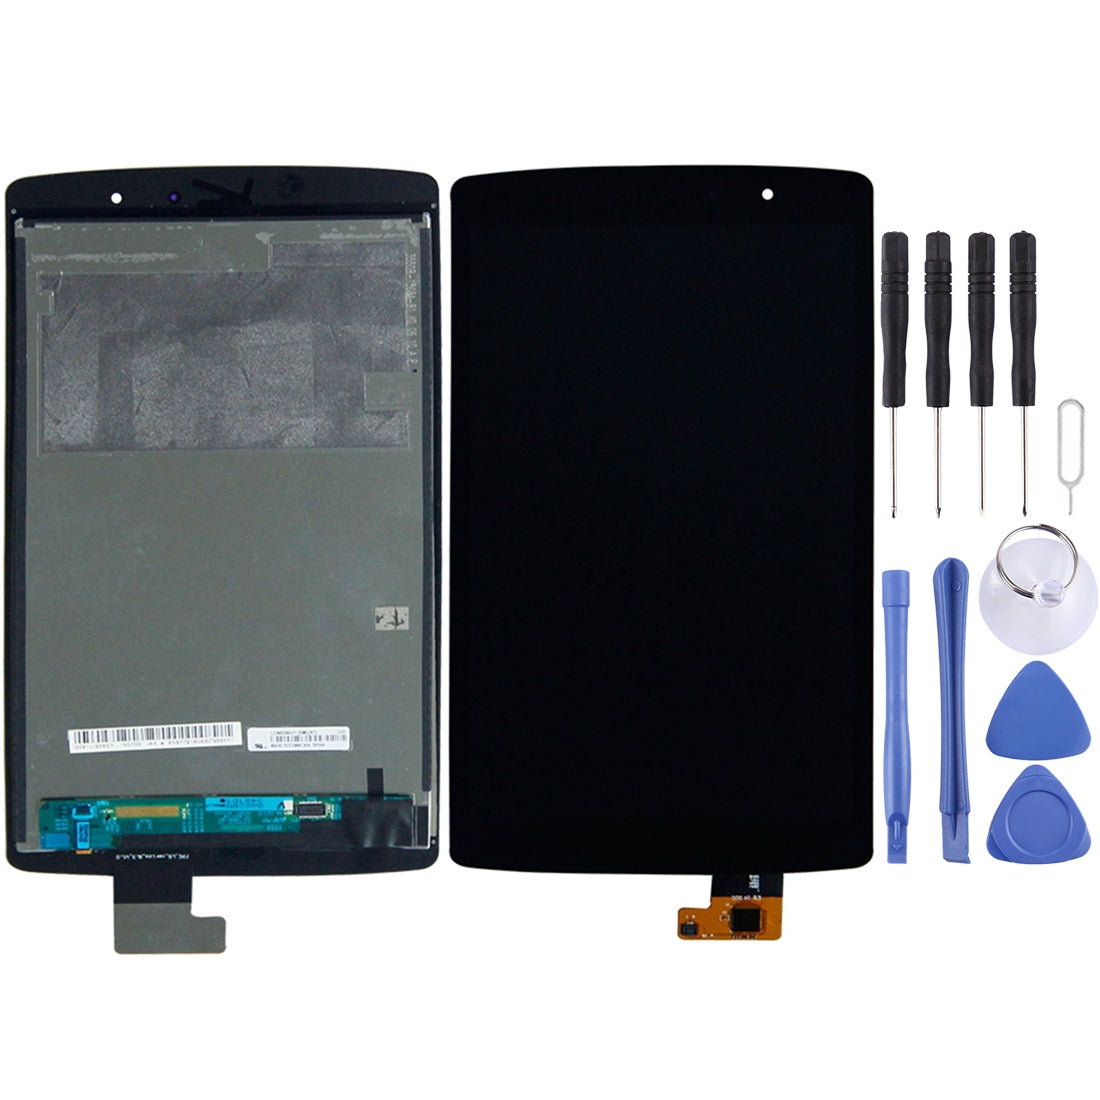 LCD Screen + Touch Digitizer LG G Pad X 8.3 VK-815 VK815